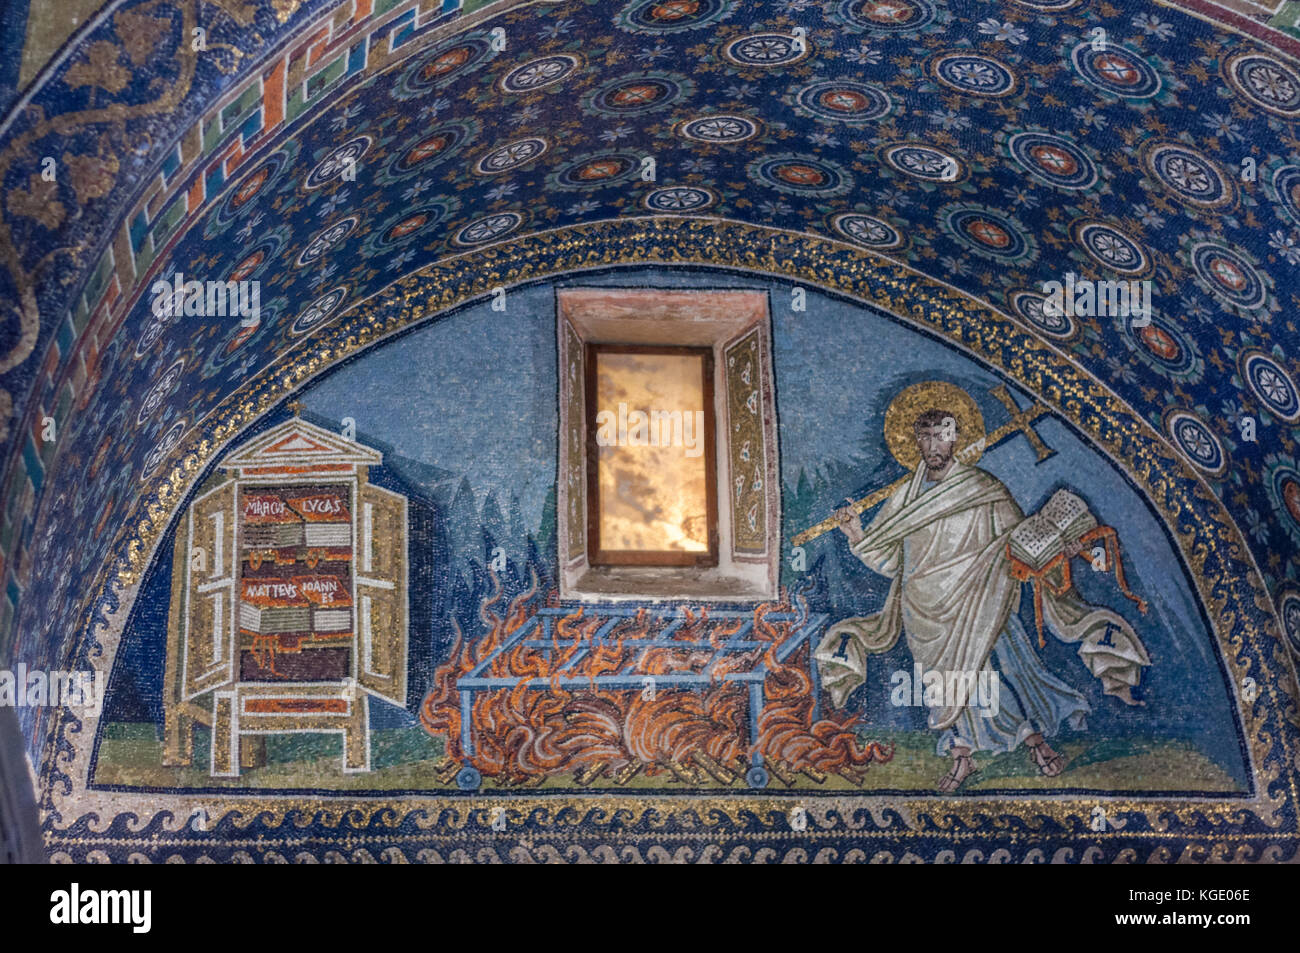 'Martyrdom of St. Lawrence' mosaic inside the Mausoleum of Galla Placidia, Ravenna.  Byzantine mosaic and the alabaster window panel. Stock Photo